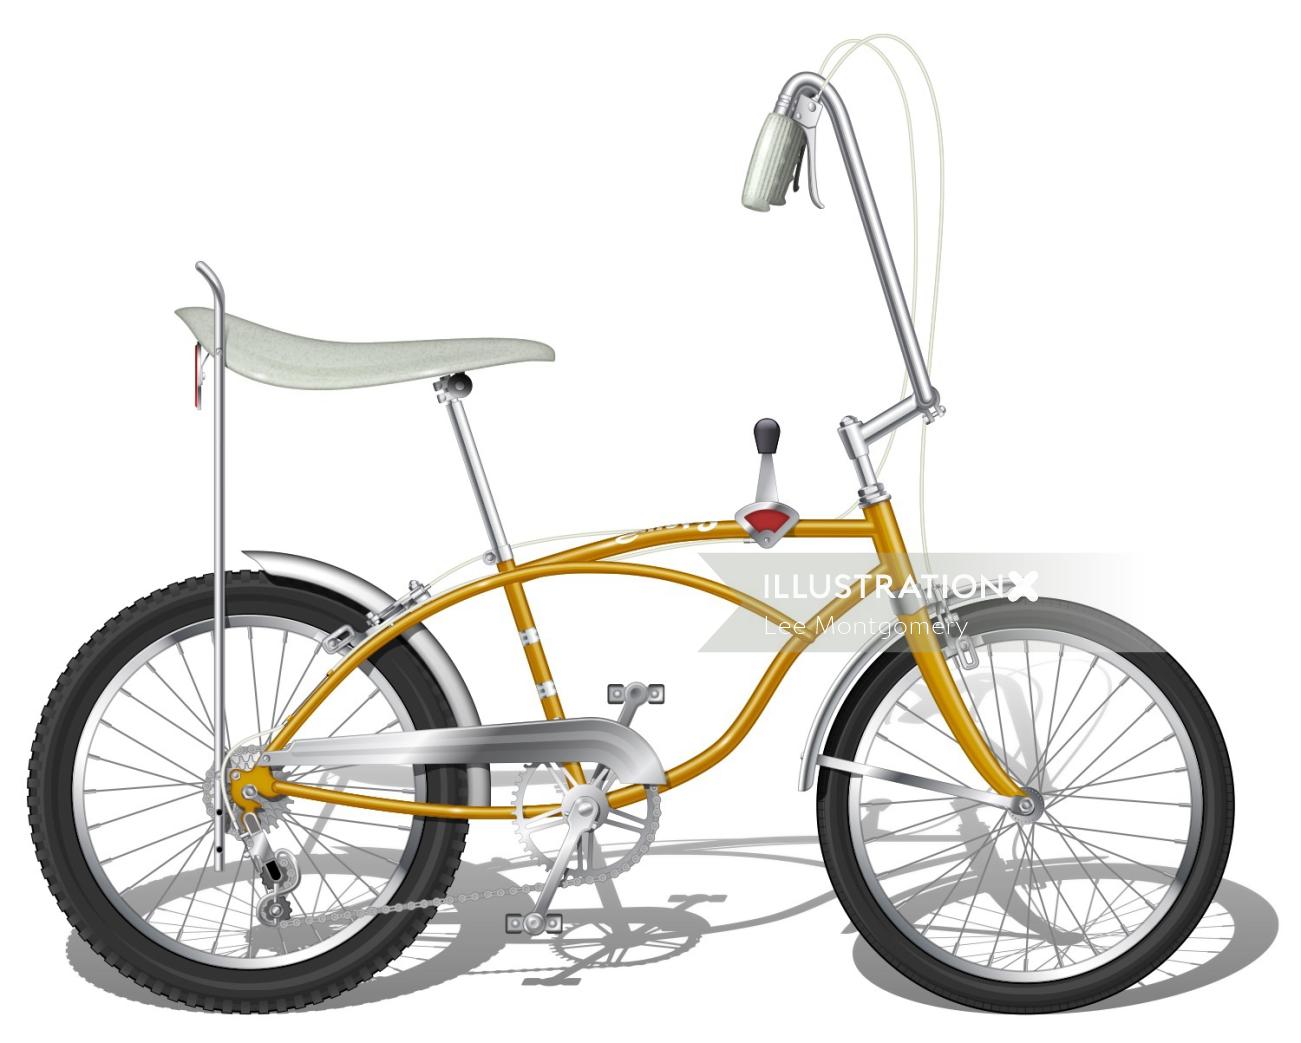 Illustration du vélo Steyr-Puch